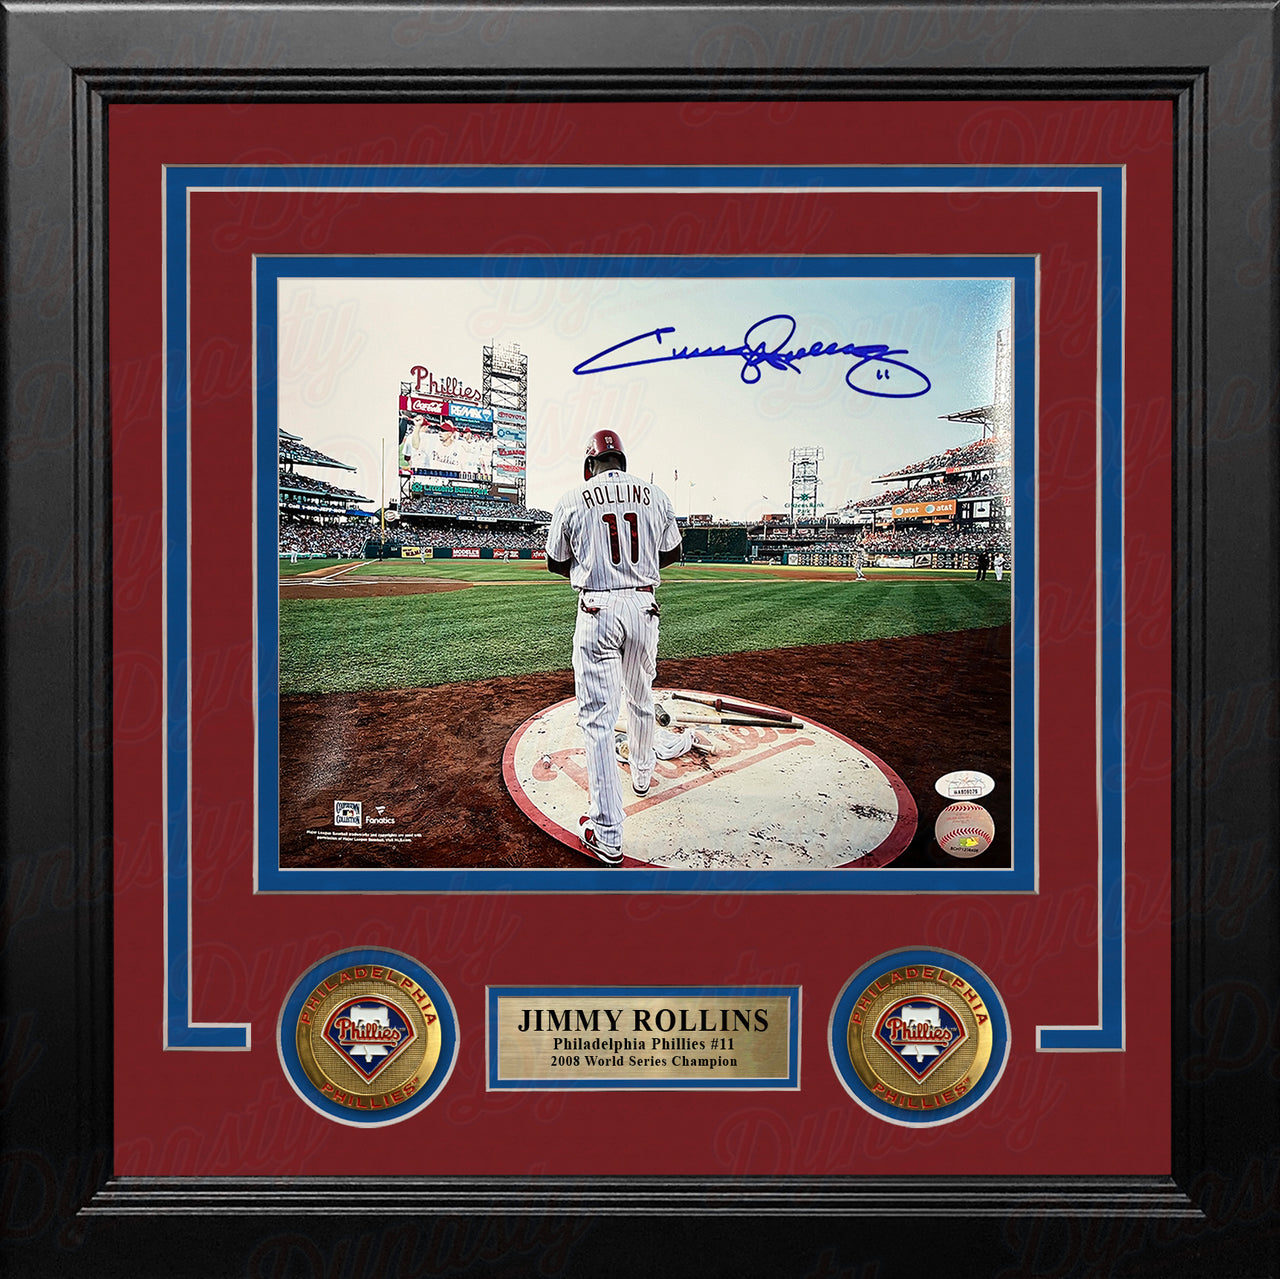 Jimmy Rollins Waits On Deck Autographed Philadelphia Phillies 8x10 Framed Baseball Photo - Dynasty Sports & Framing 